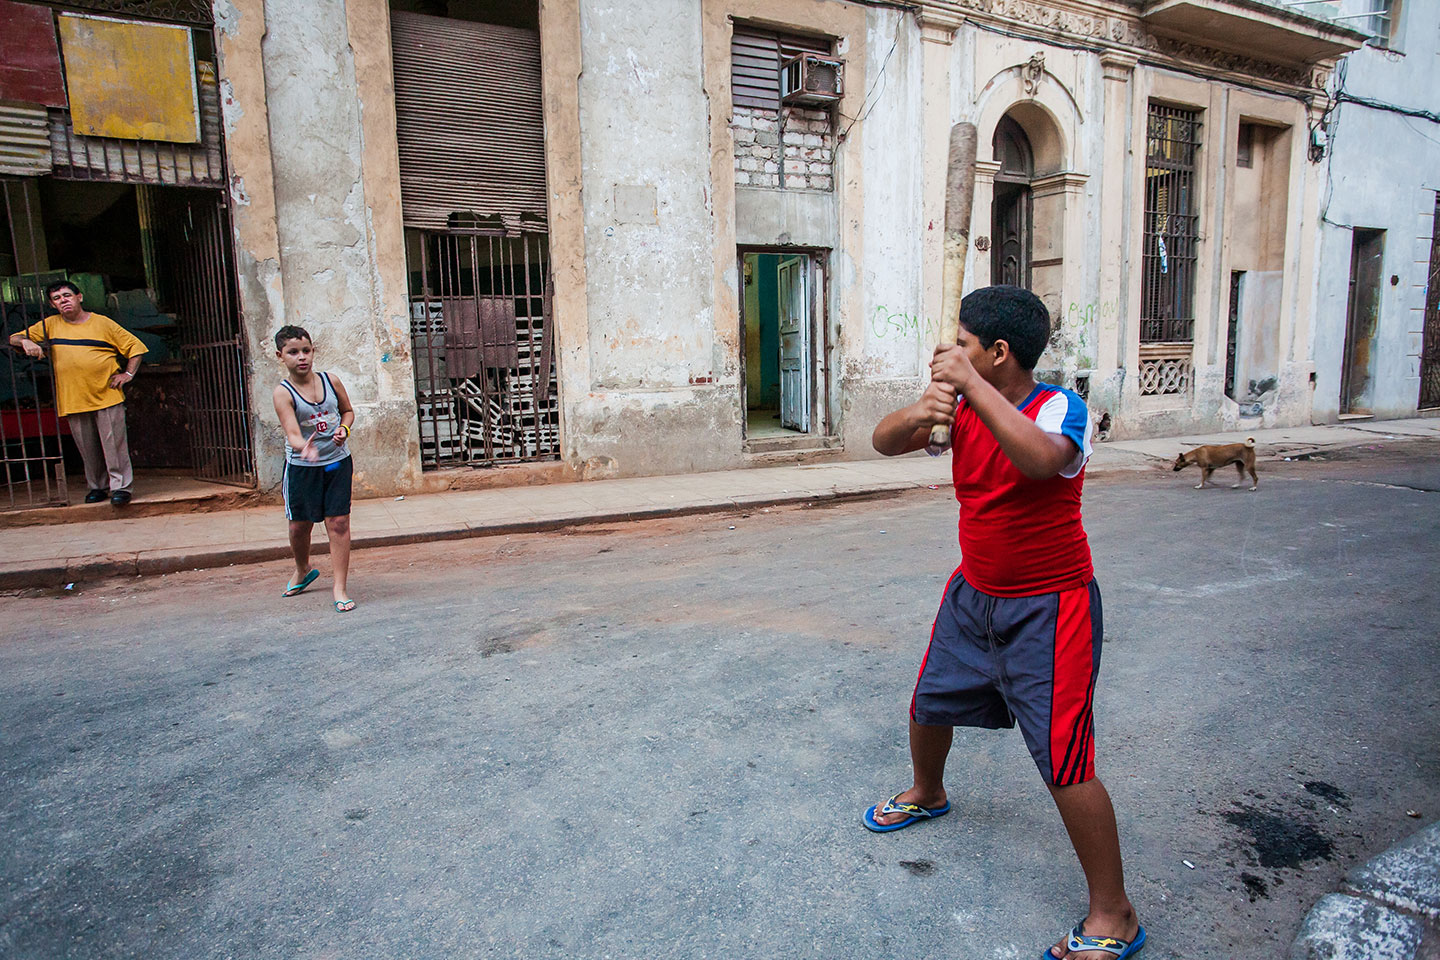 Kids playing baseball in the streets of Havana, Cuba